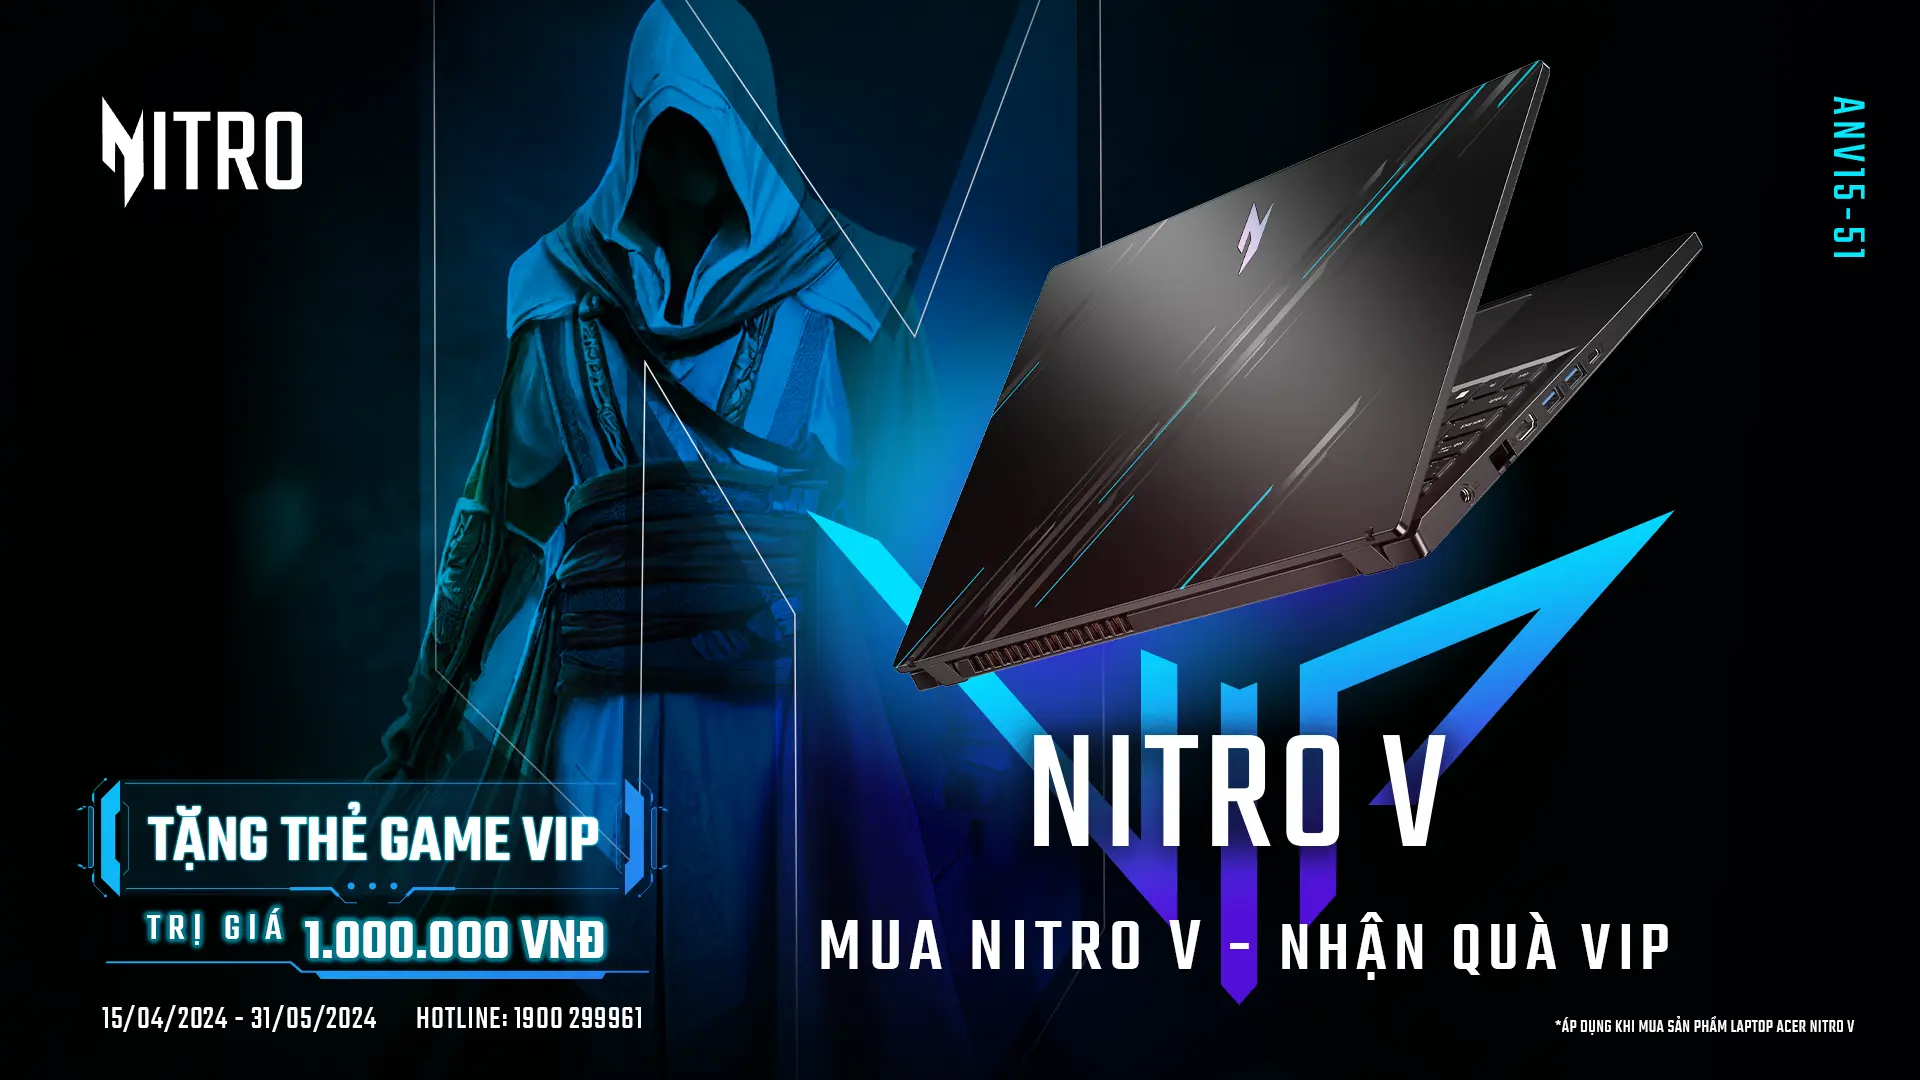 Acer - Mua Nitro V Nhận Quà VIP - Q2.2024